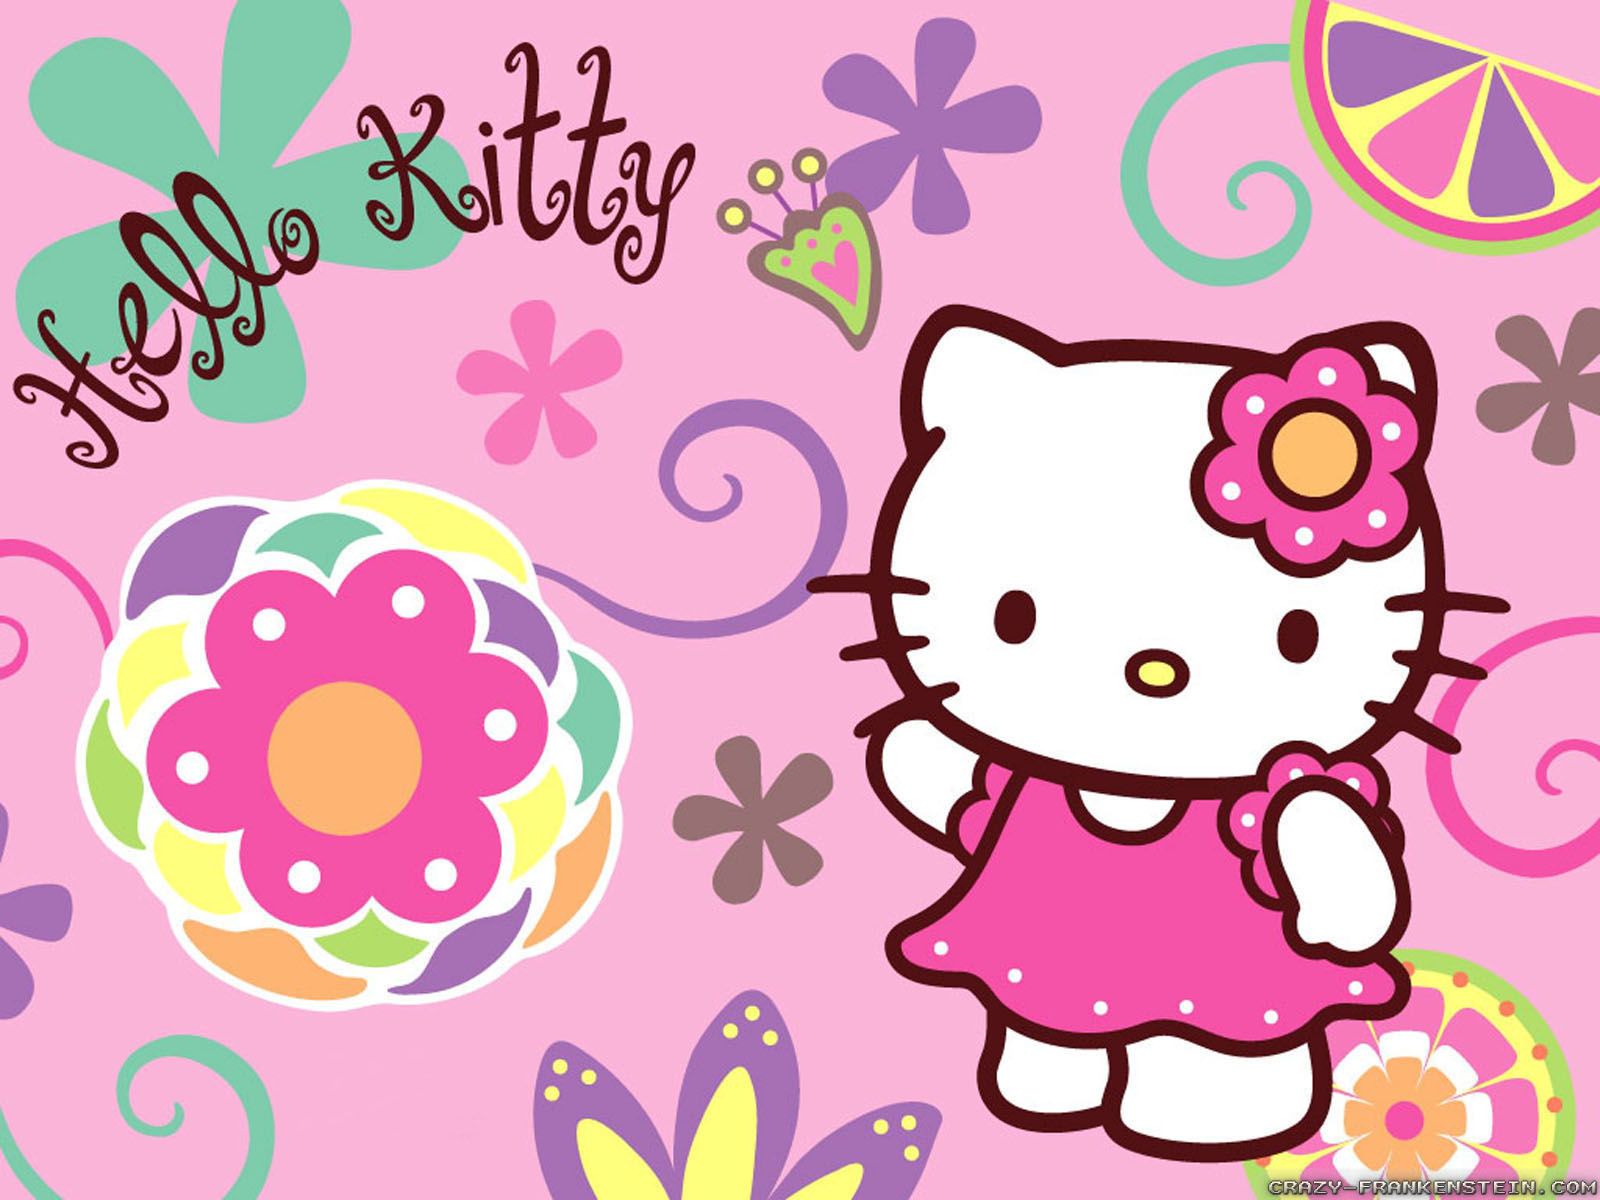 Free Hello Kitty Wallpaper High Quality.jpg